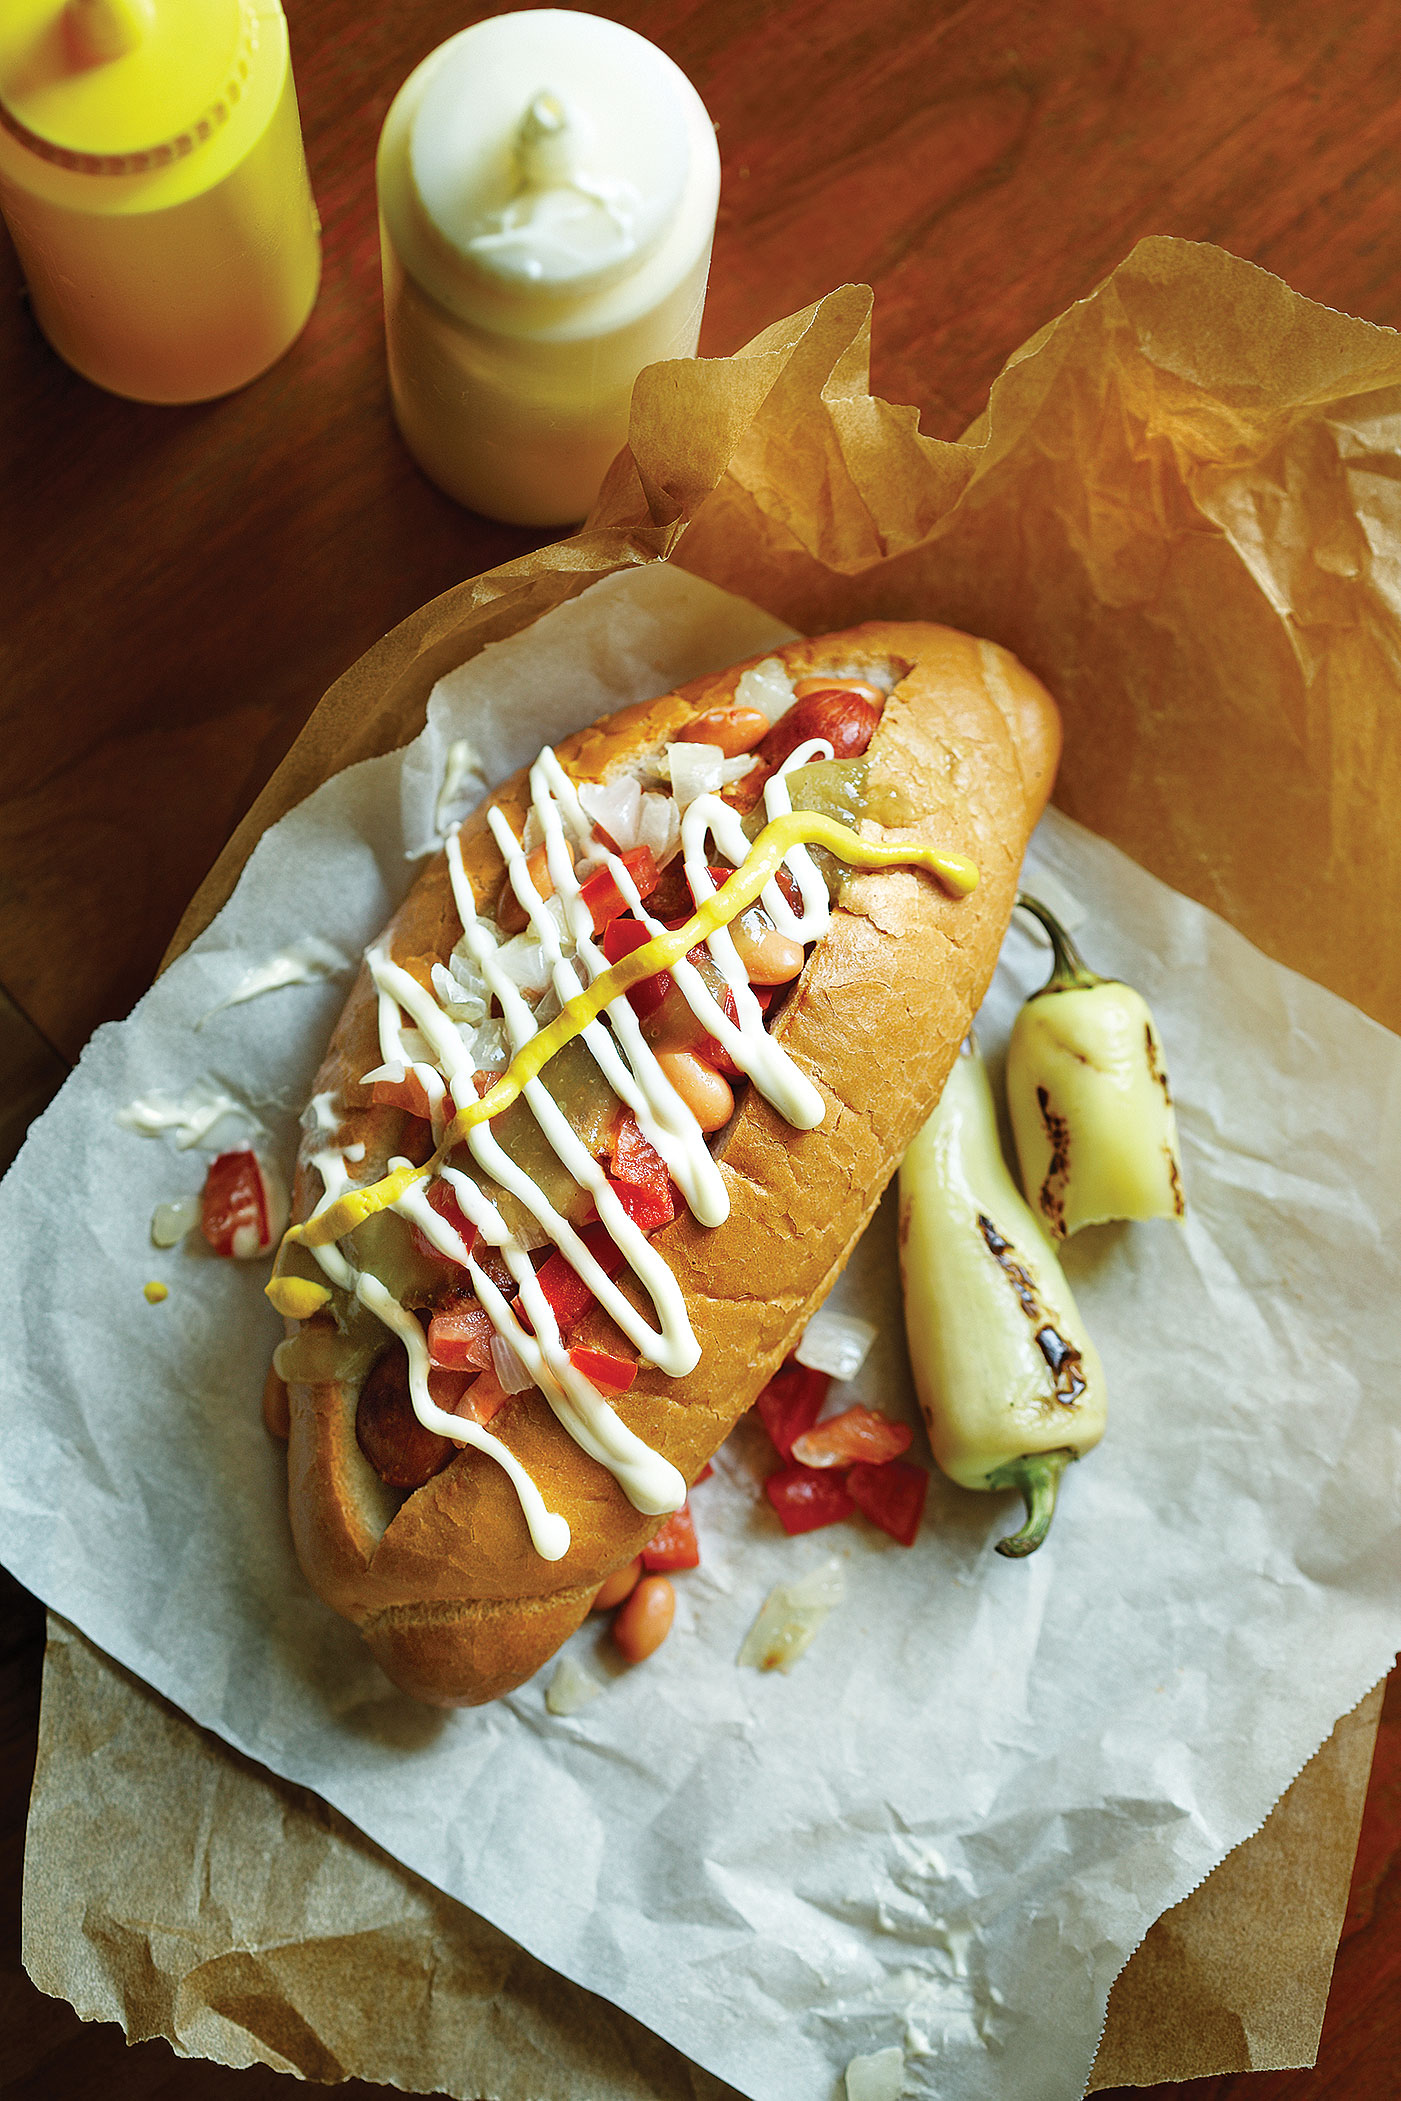 Western Essential: The Sonoran Hot Dog